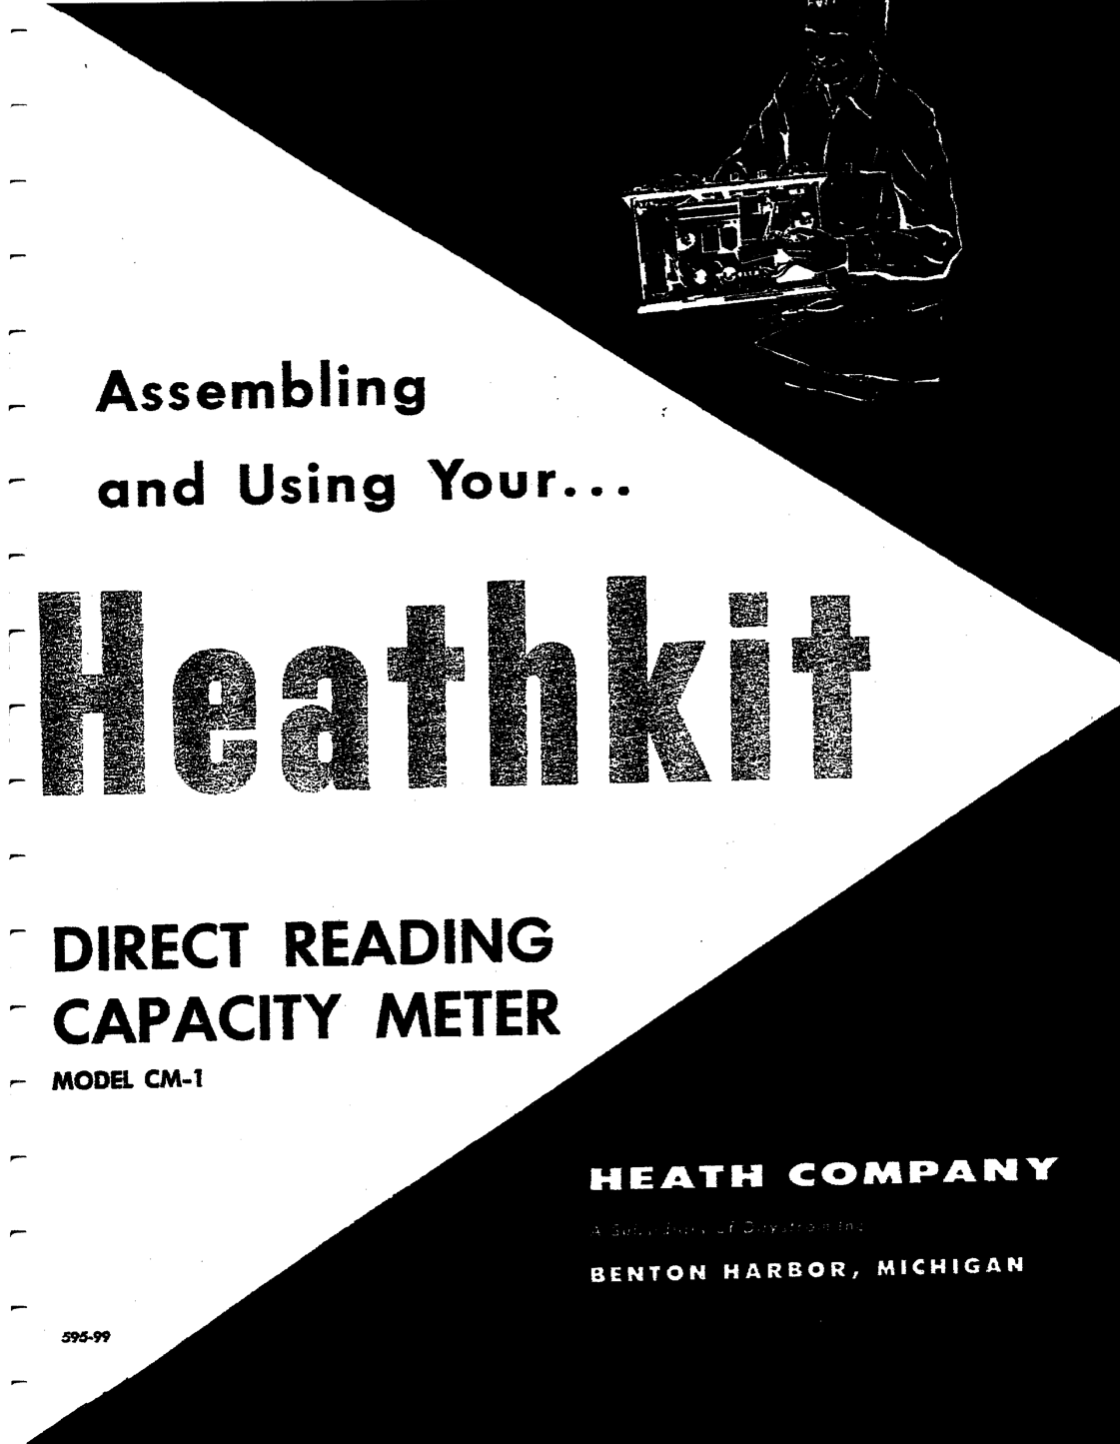 HeathKit CM-1 Direct Reading Capacity Meter - Assembly Manual